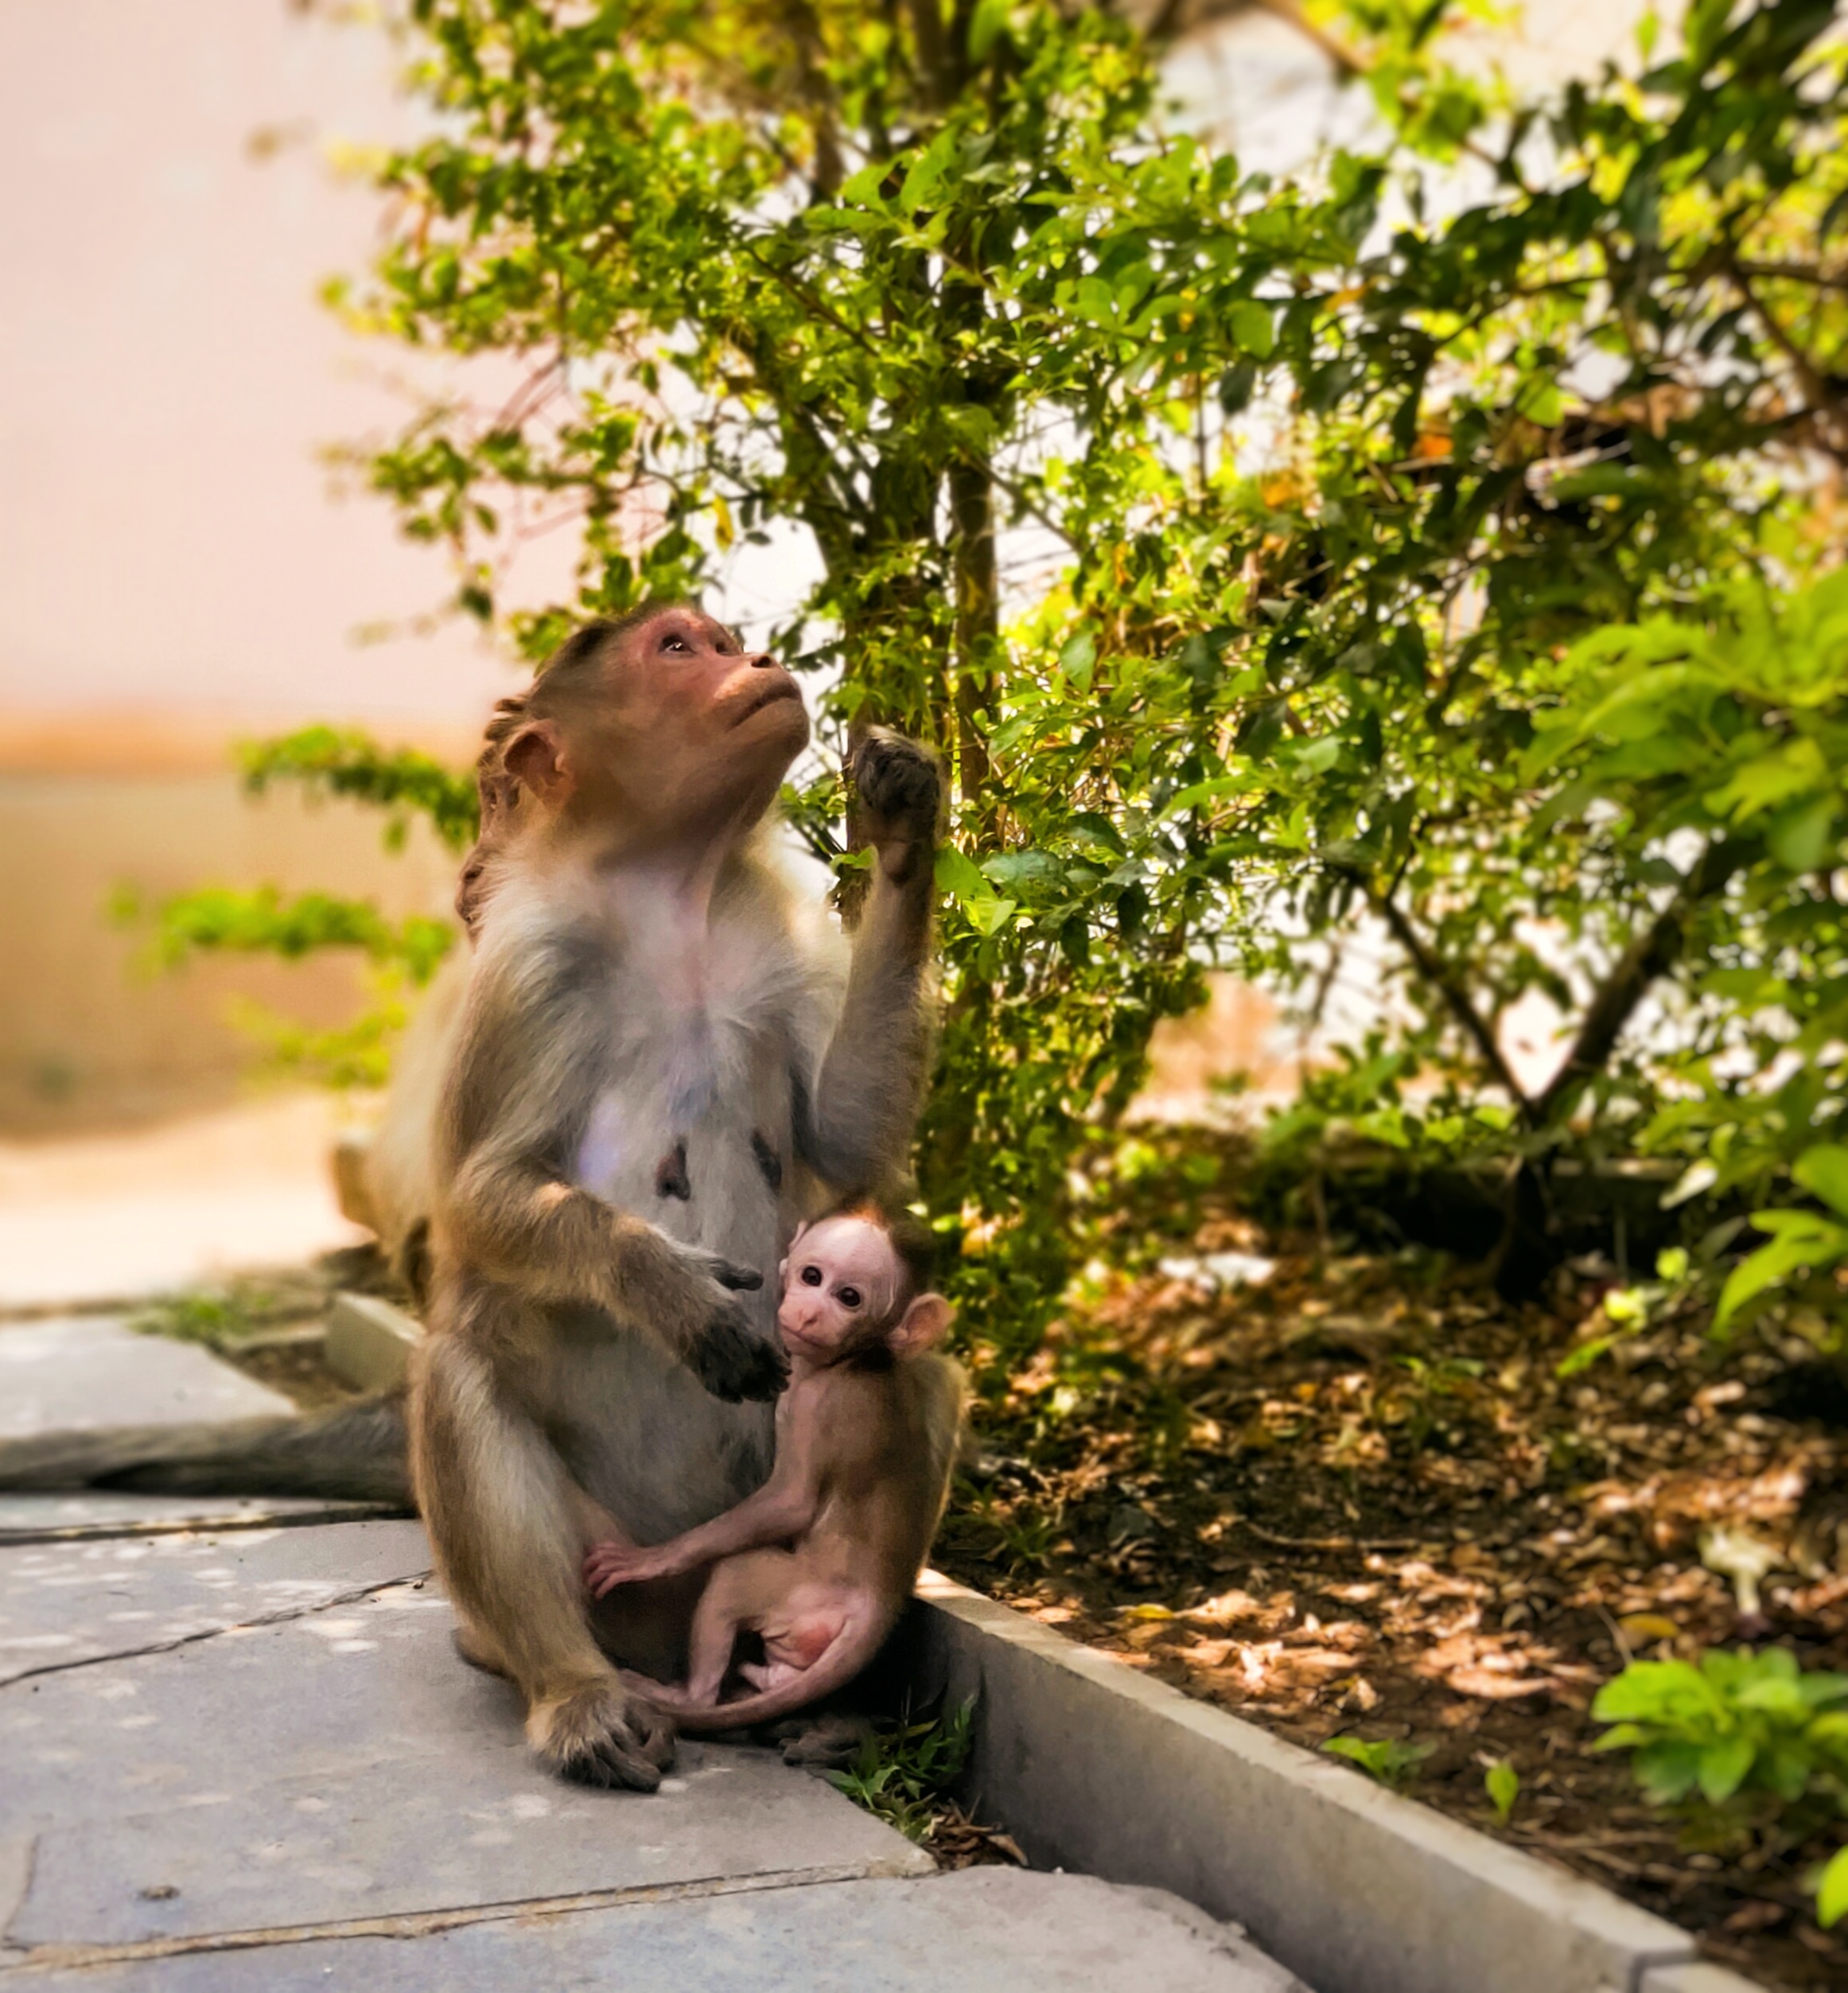 A male monkey with baby monkey